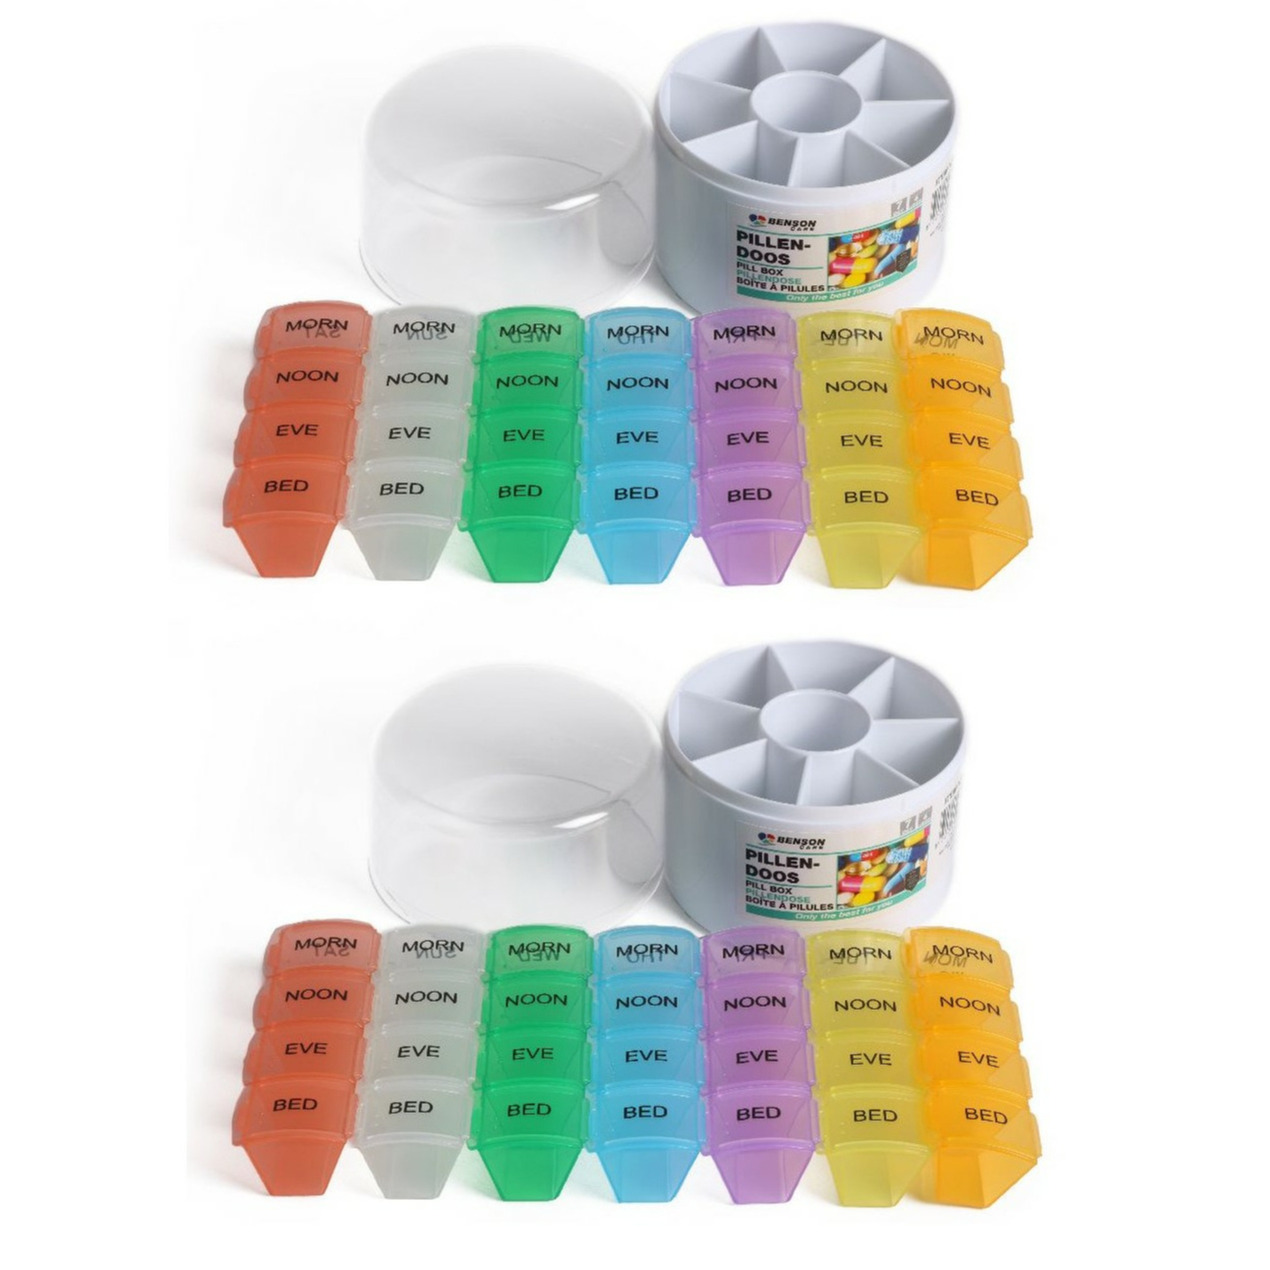 2x stuks Benson medicijnen dozen-pillen dozen gekleurd 28-vaks